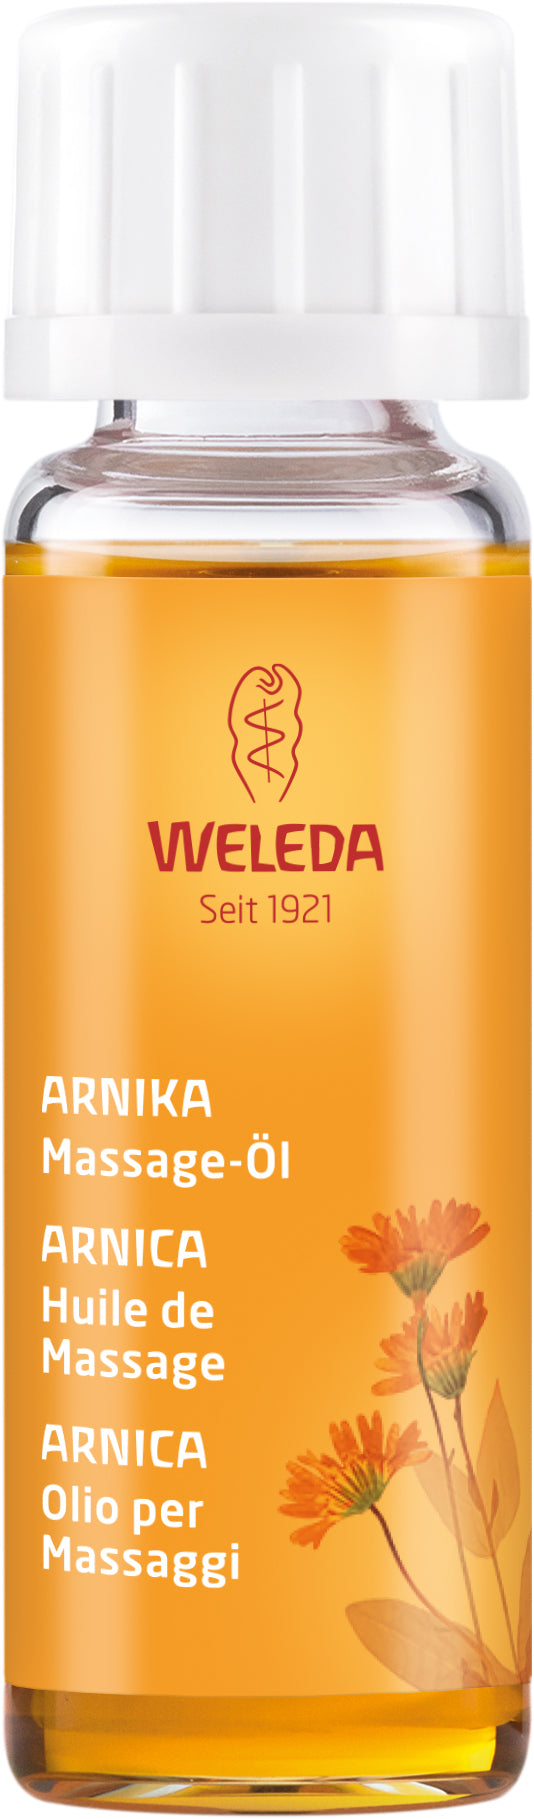 Arnika Massage-Öl